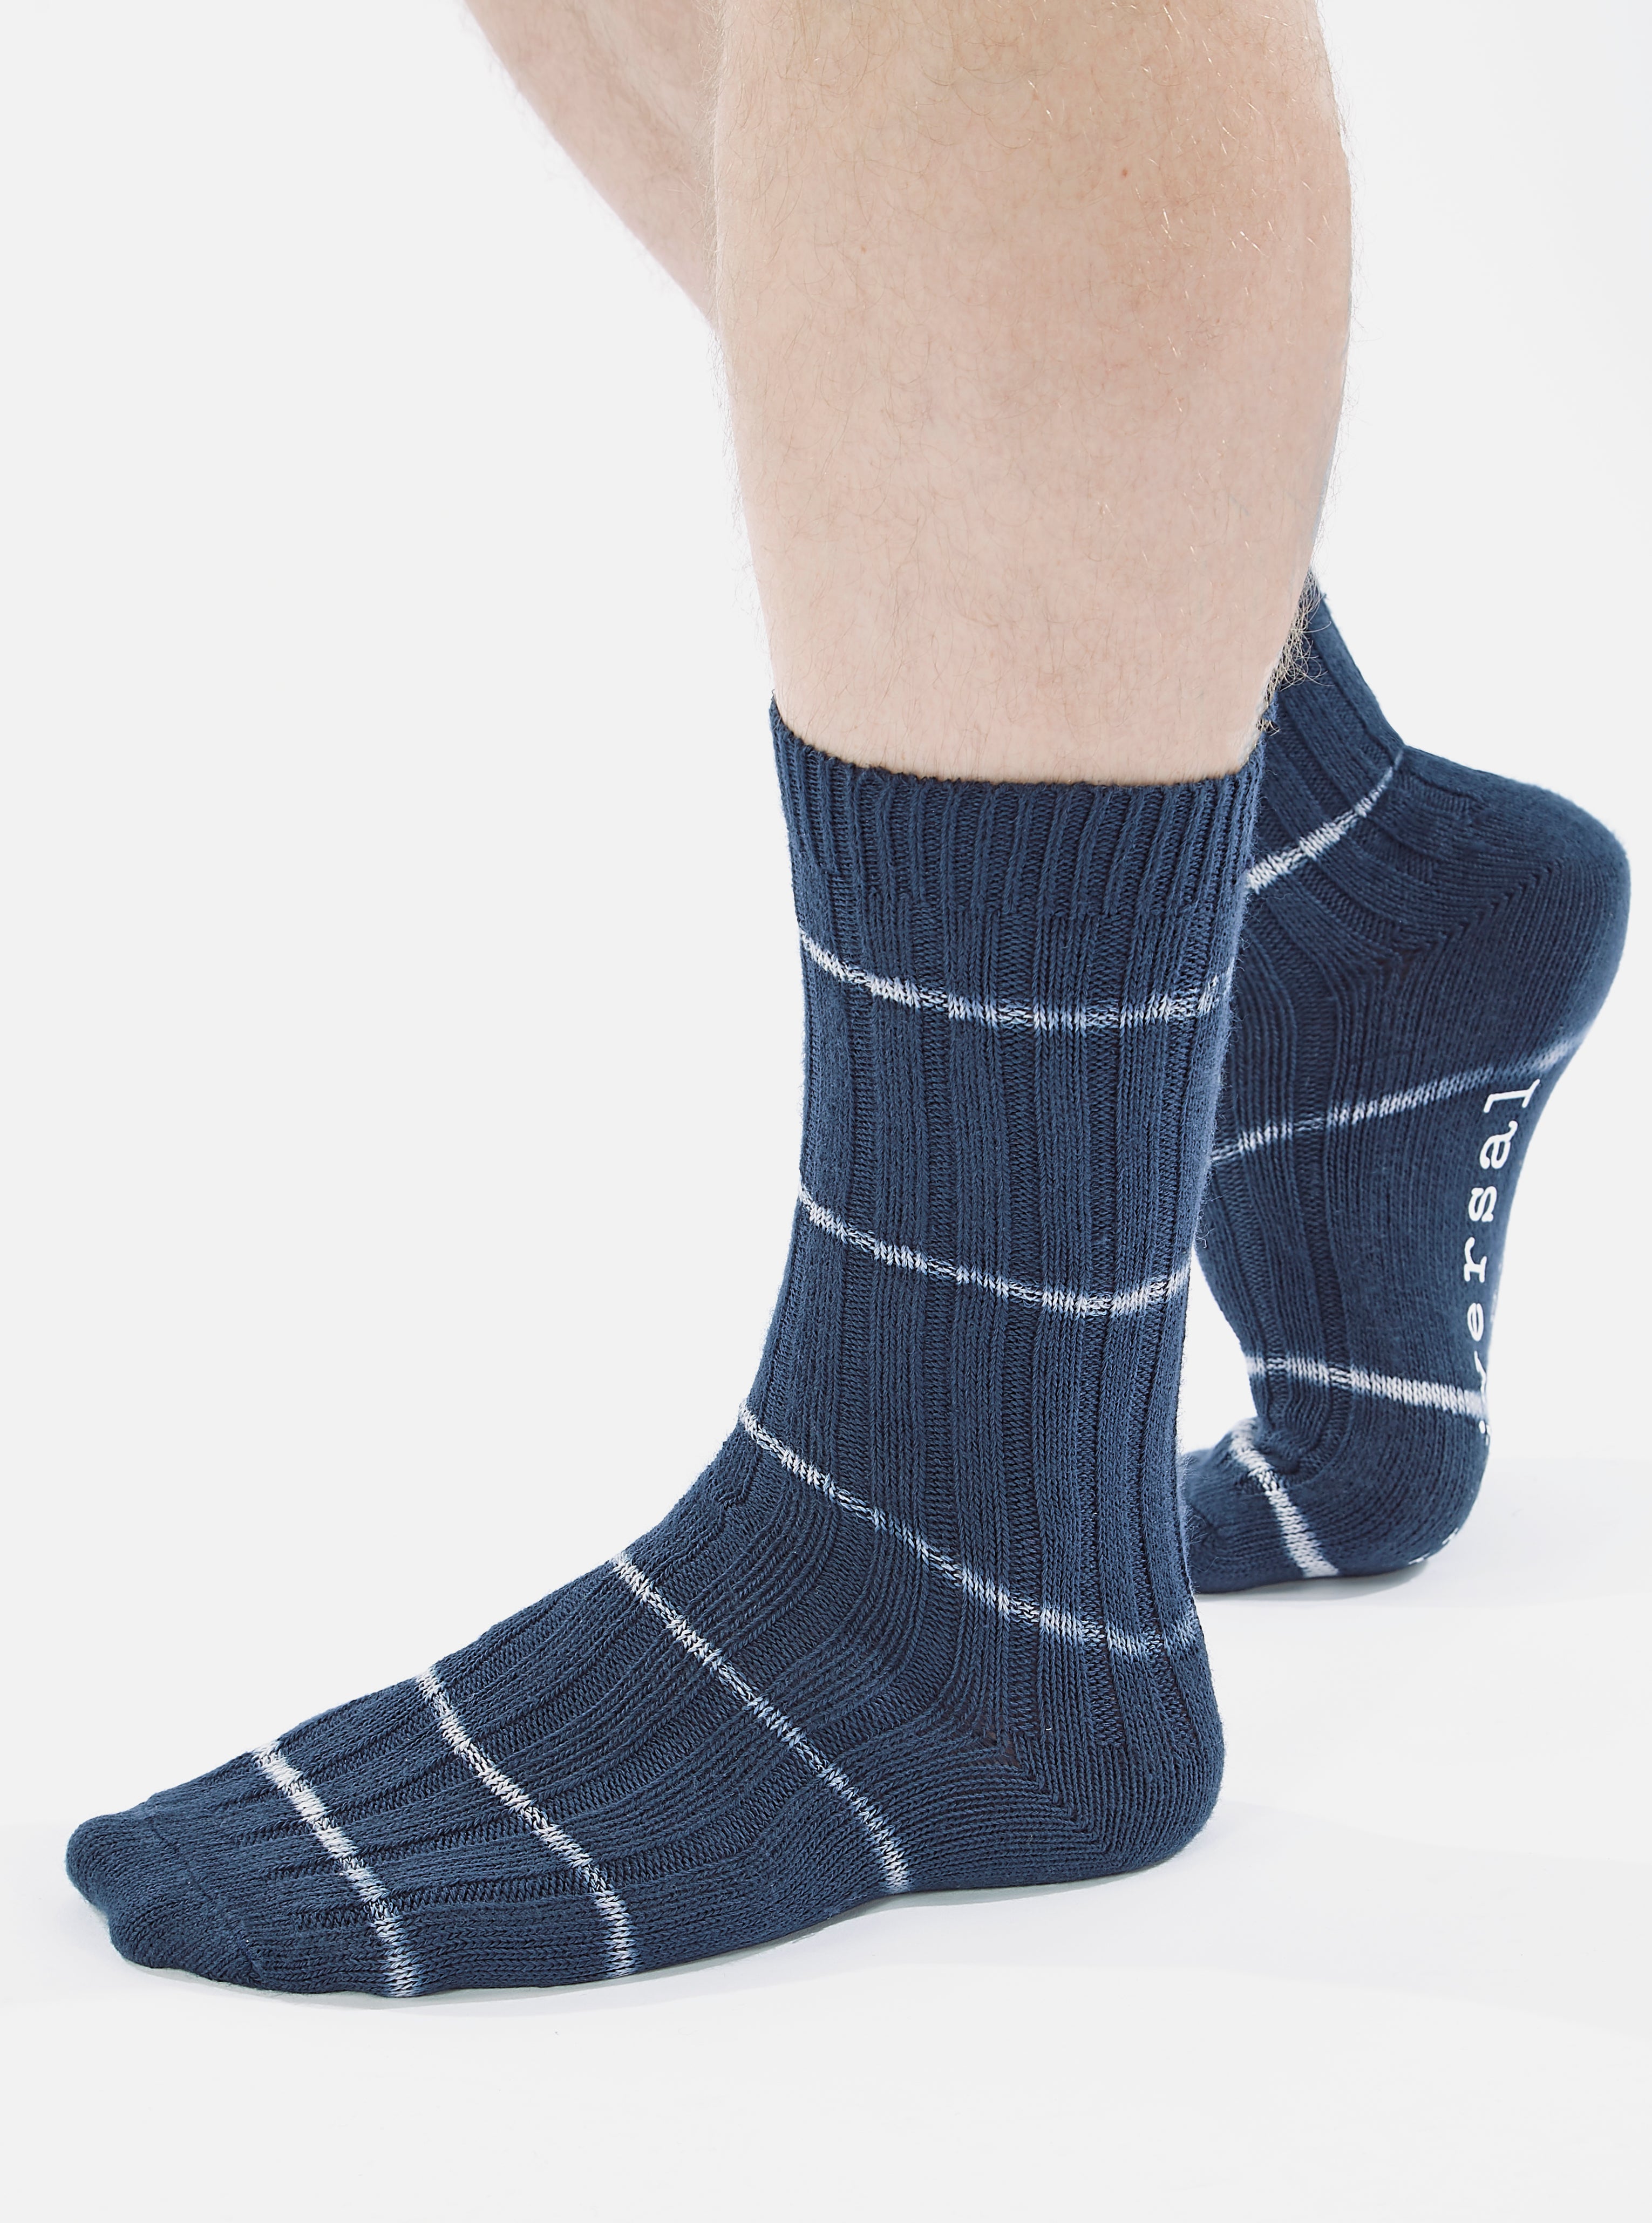 Universal Works Slub Sock in Navy Tie Dye Knit